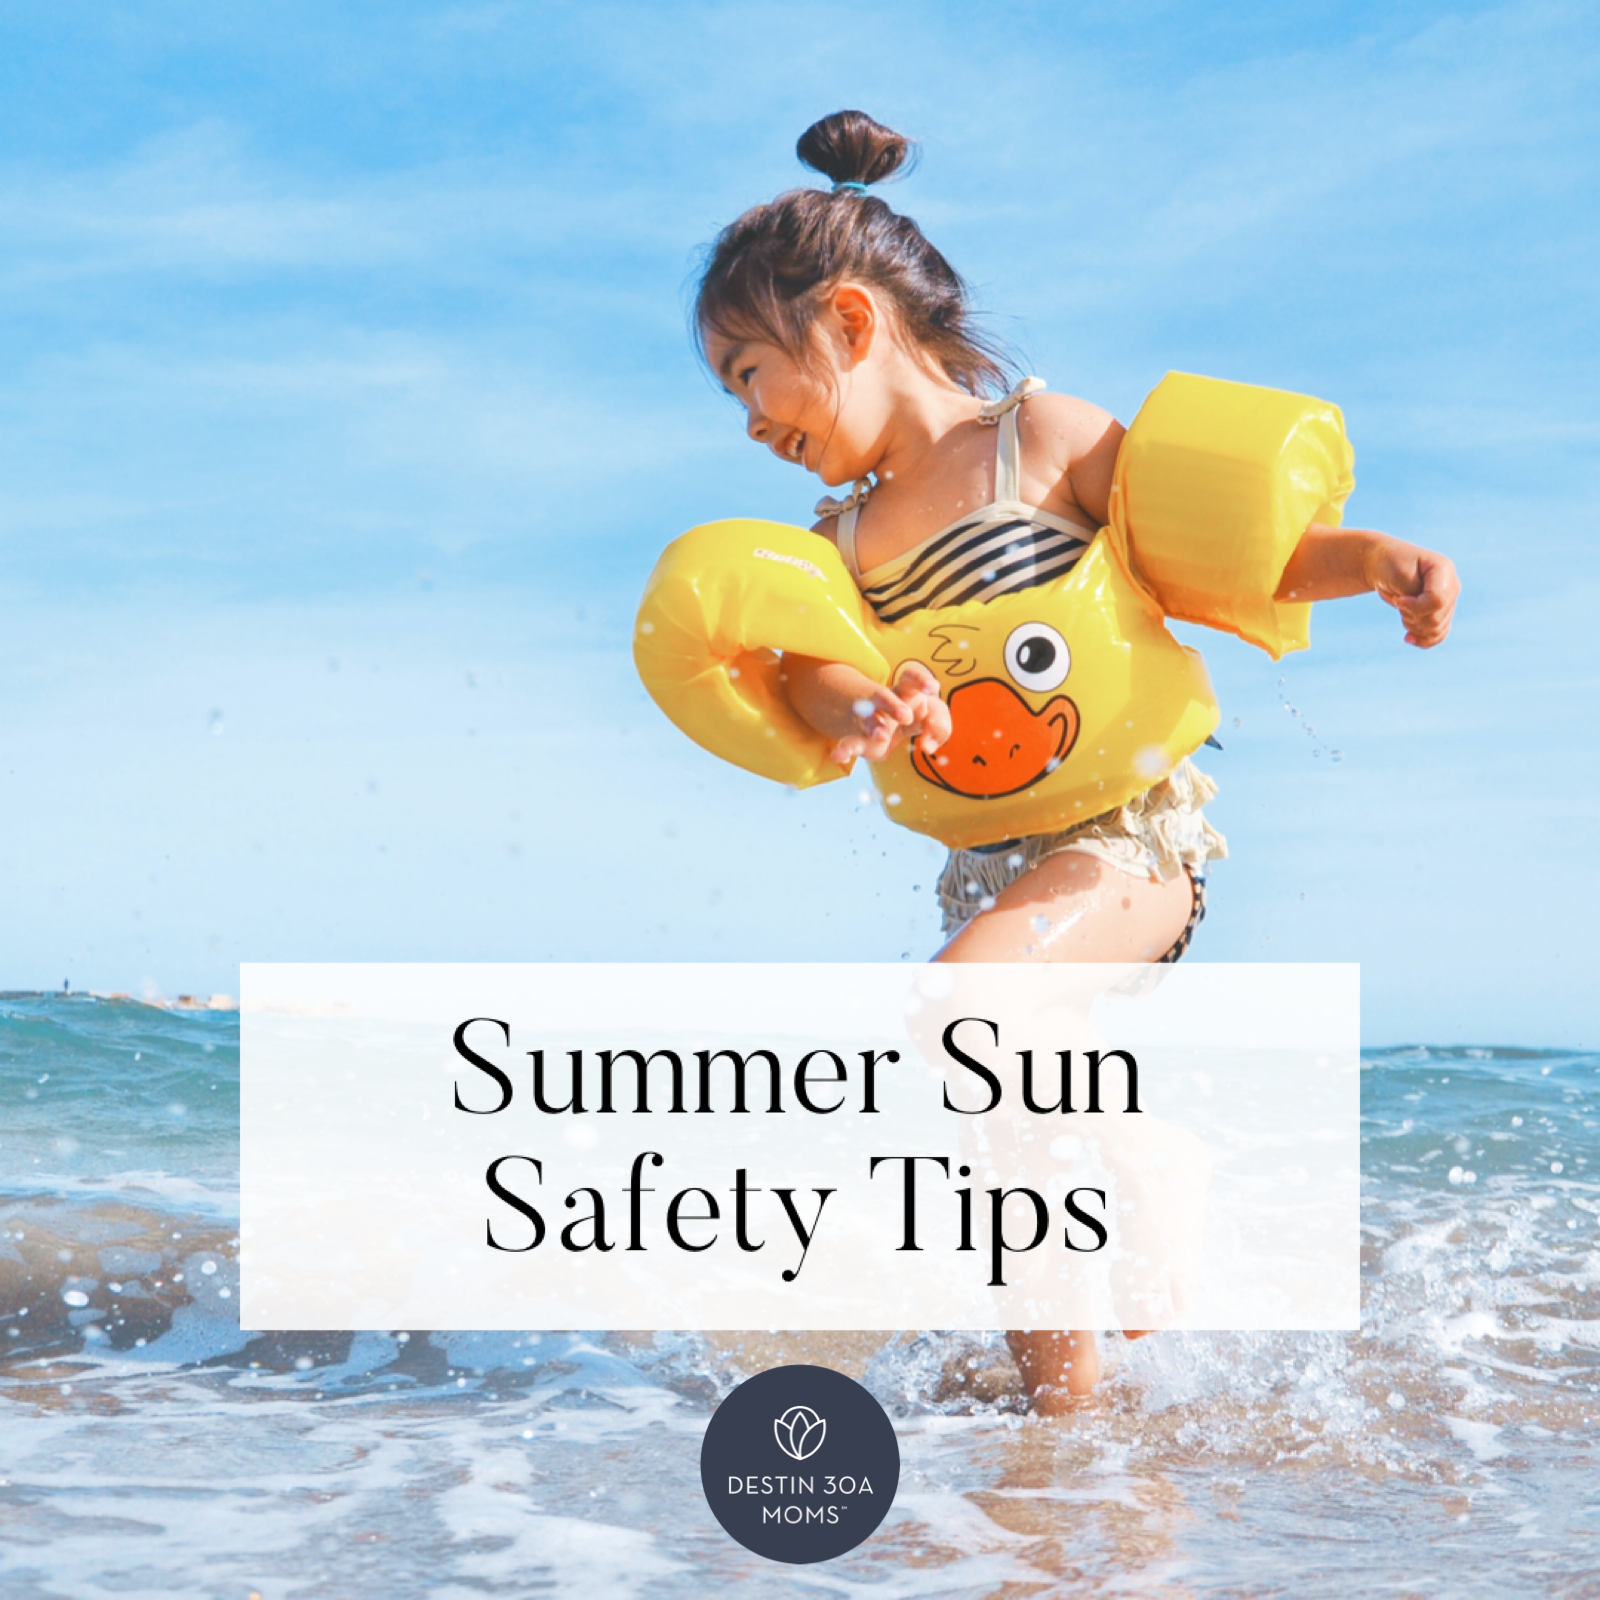 summer sun safety tips destin 30a moms